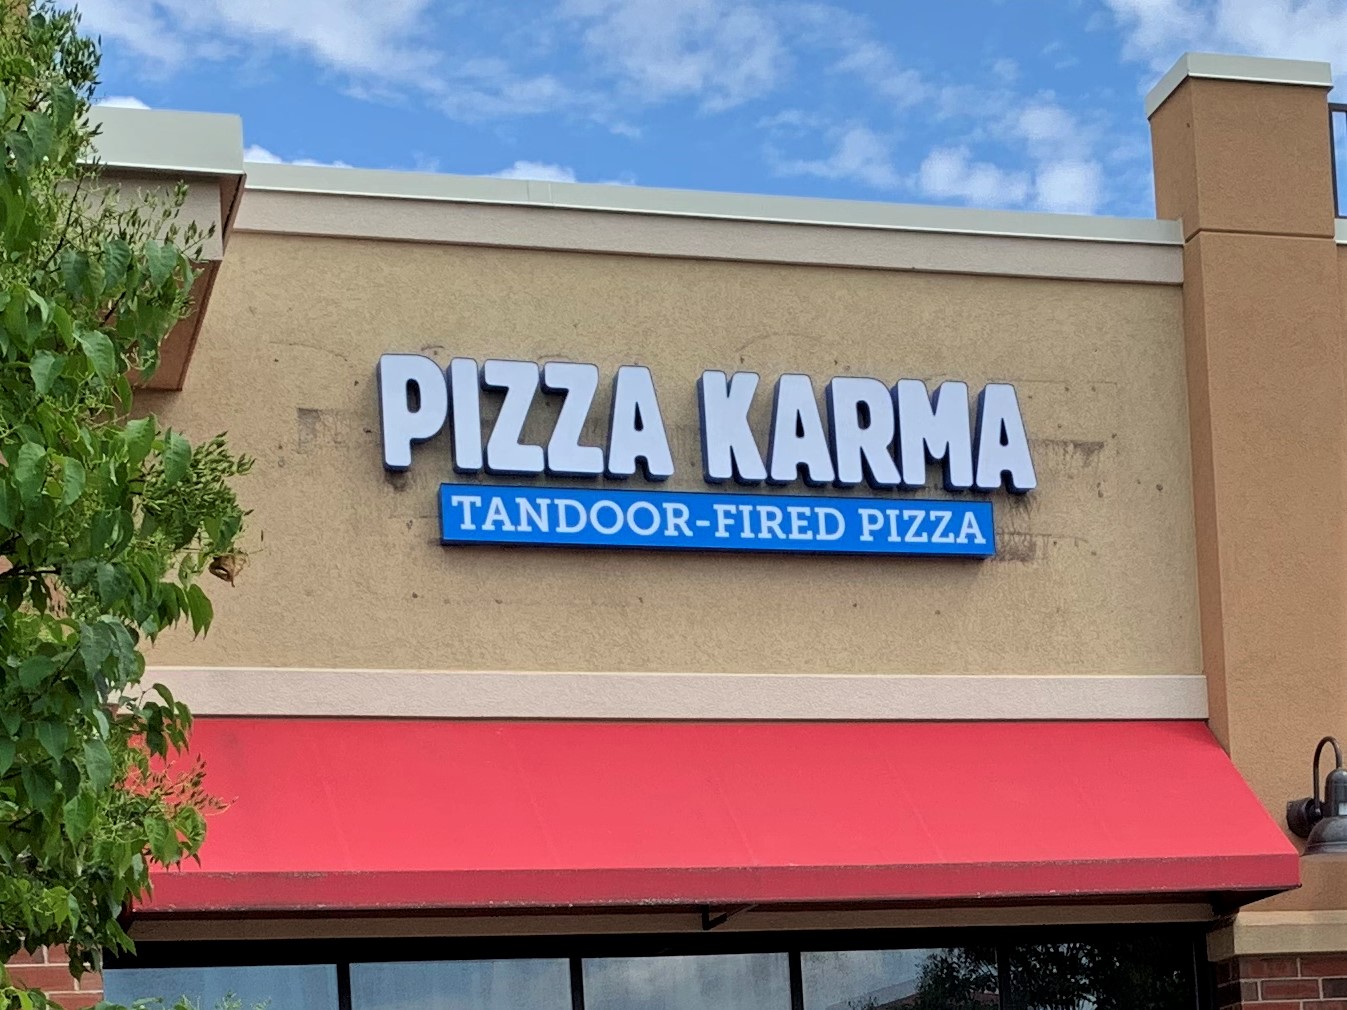 PIZZA KARMA – Restaurant Signage